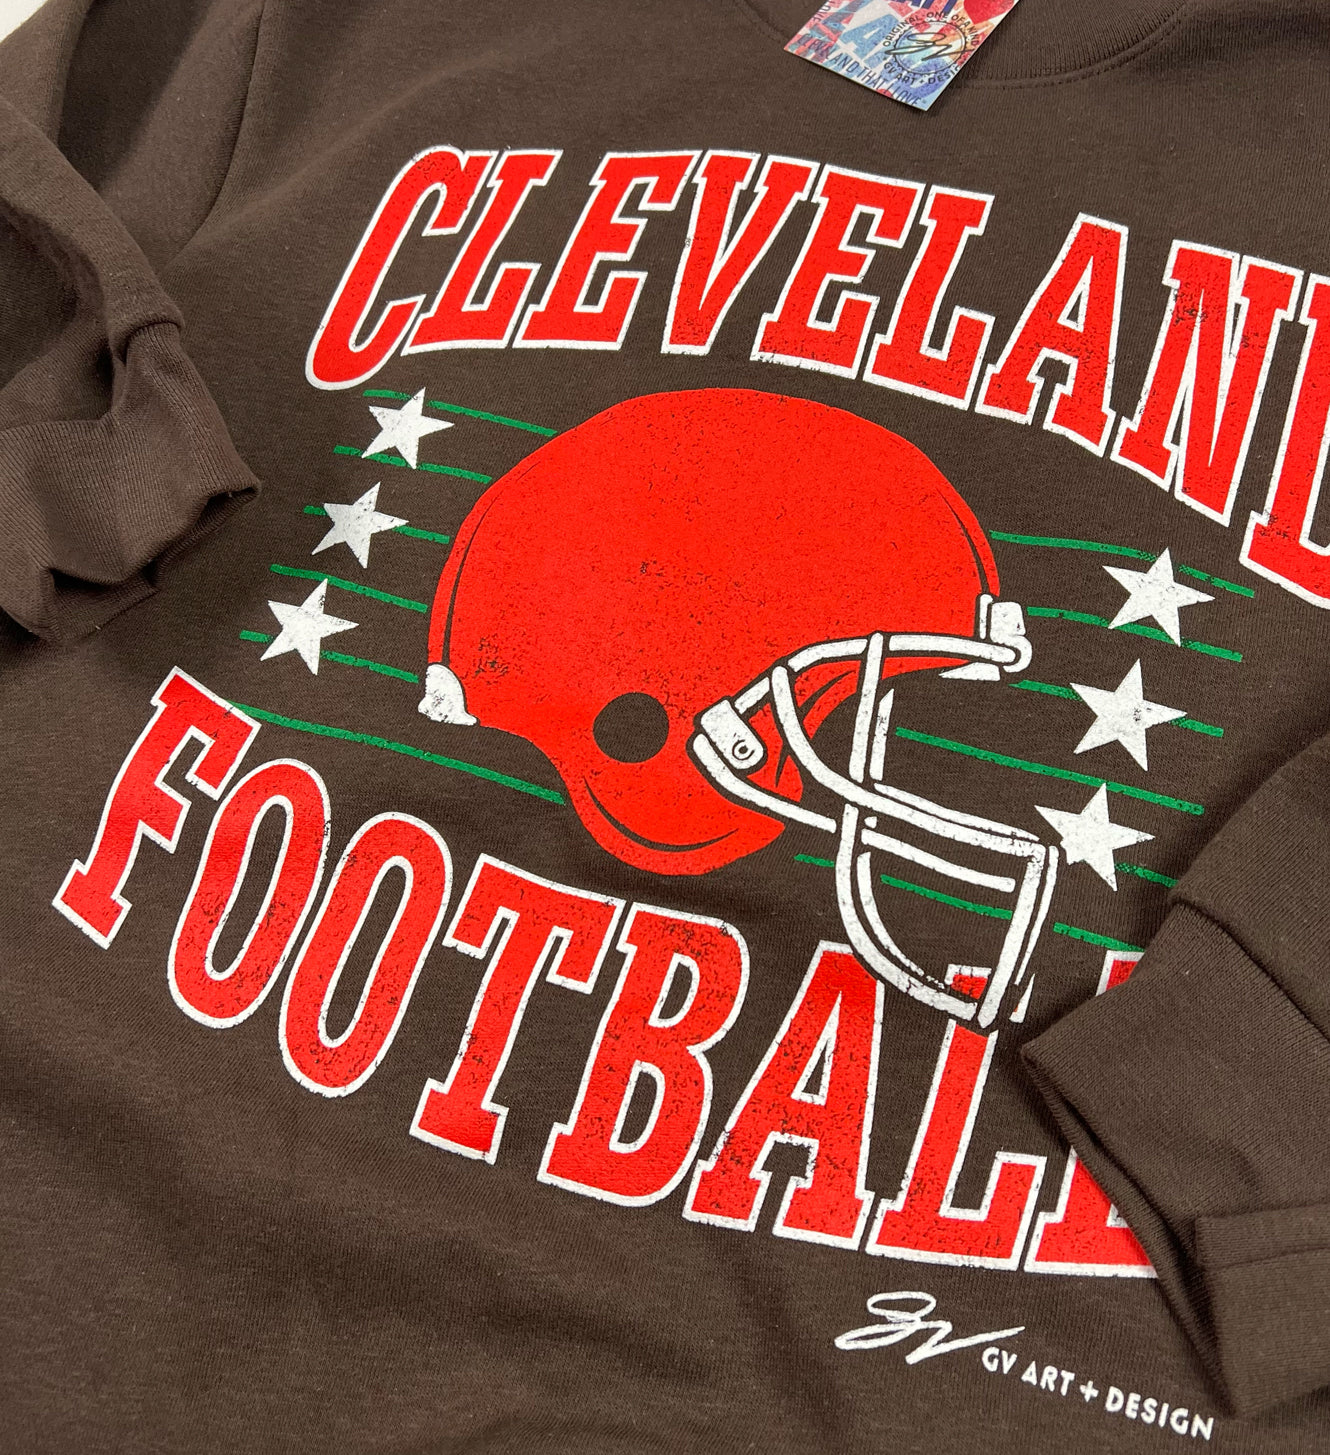 Brown Cleveland Football Vintage Crew Sweatshirt